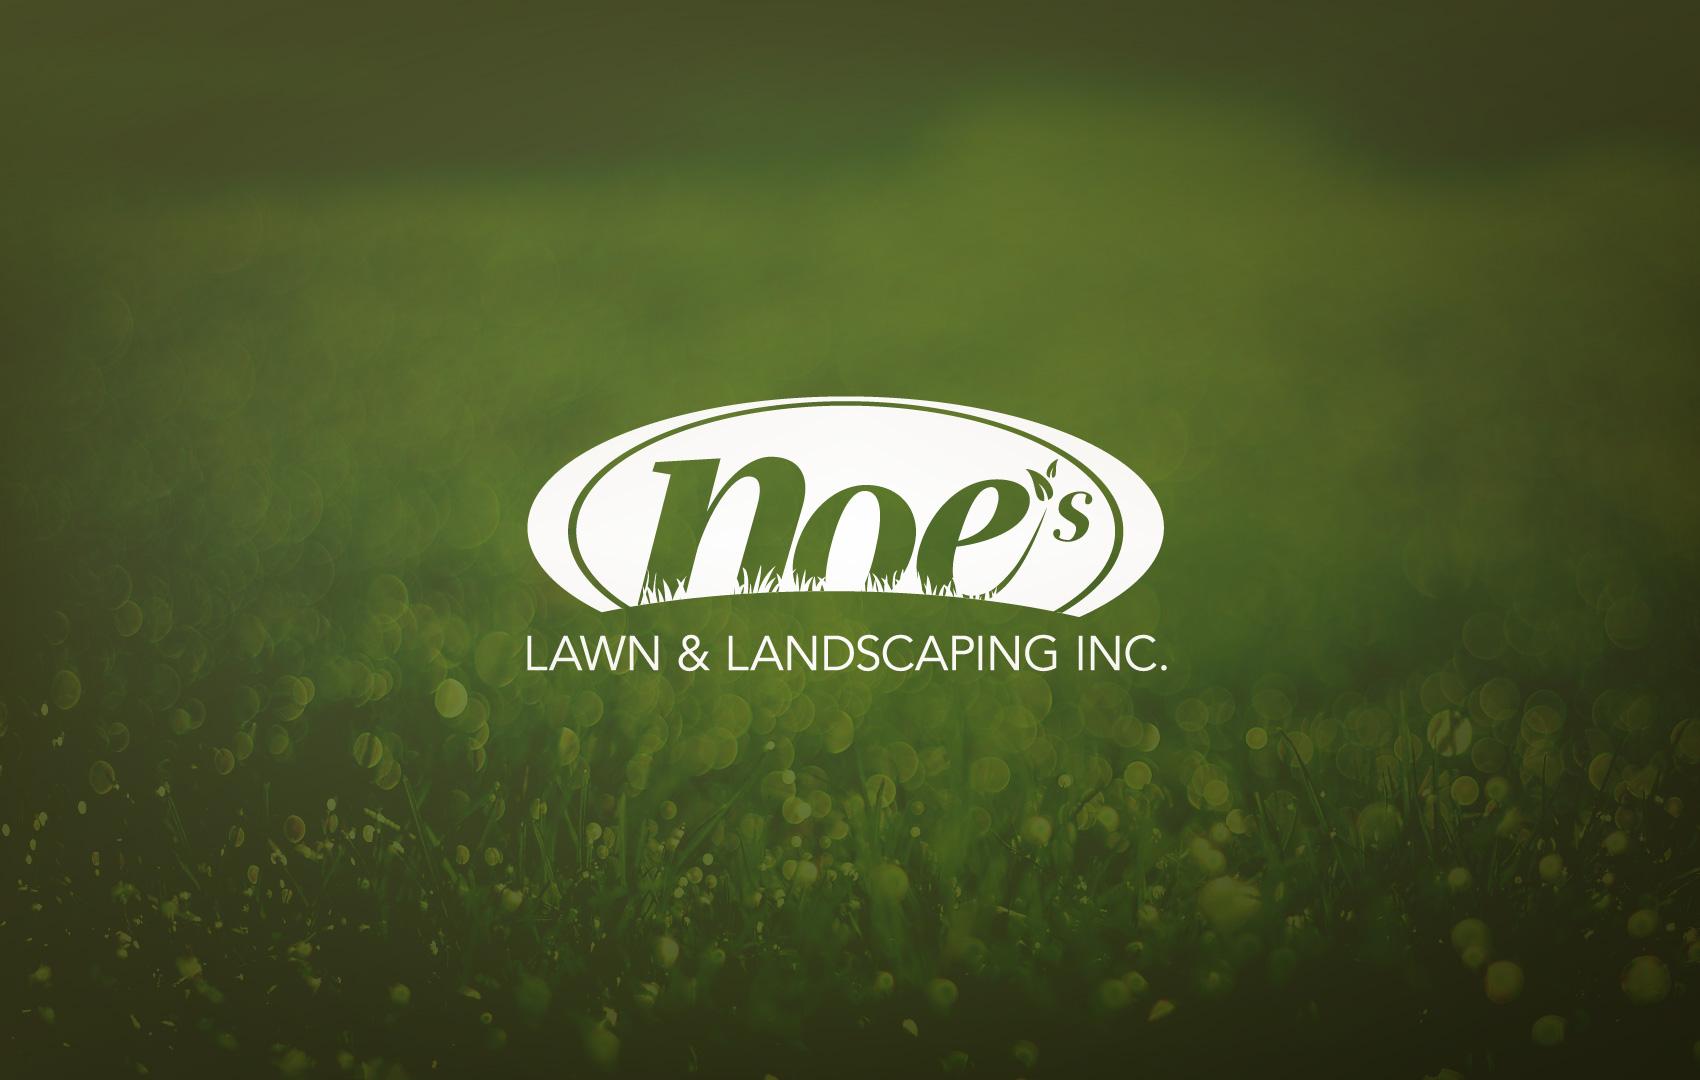 hibriden logotype design |Noe's Lawn & Landscaping